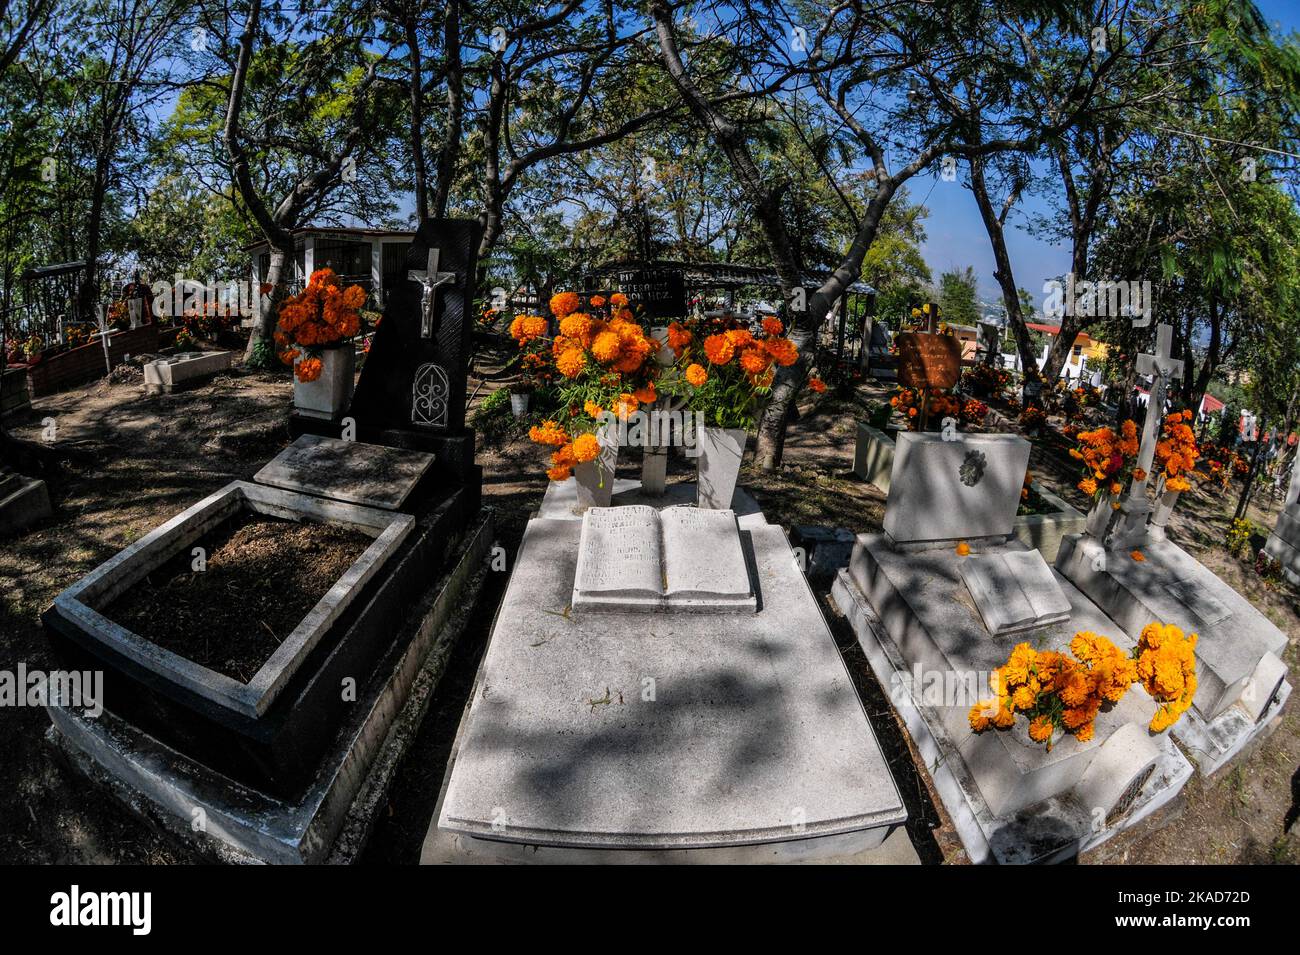 1 de noviembre de 2022, San Agustín Etla, México: La gente asiste al  cementerio de San Agustín para adornar las tumbas de sus seres queridos con  flores Cempasuchil y velas encendidas como